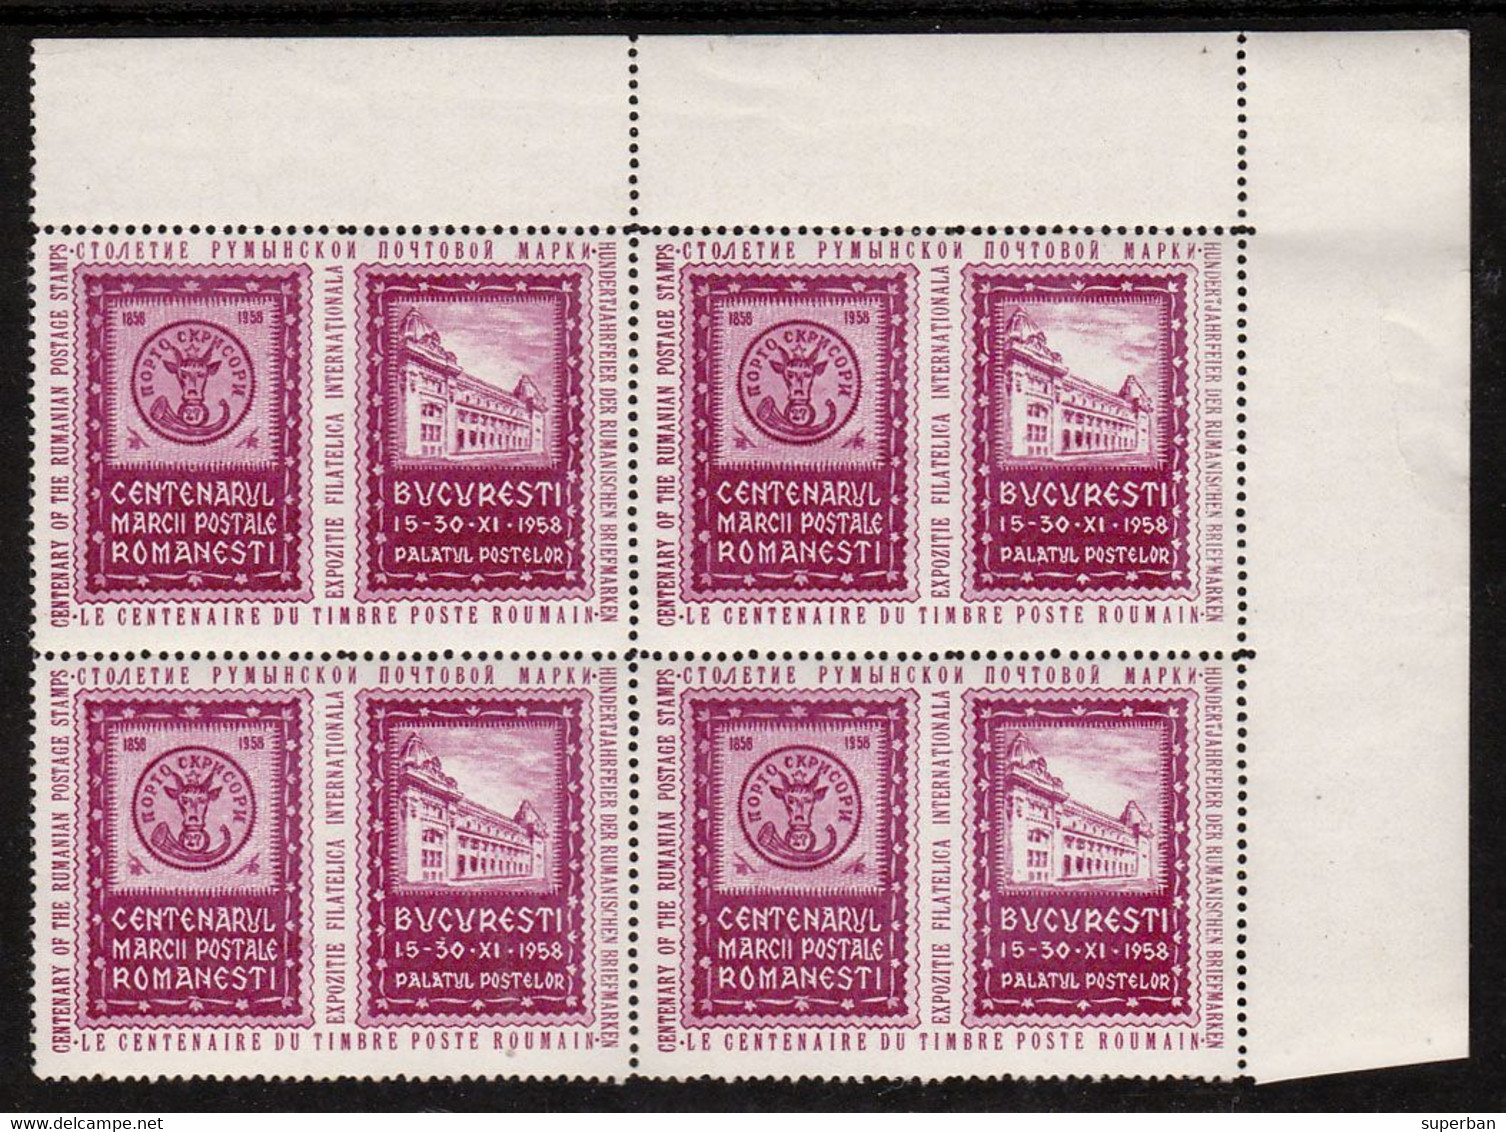 ROUMANIE / ROMANIA - VIGNETTE / CINDERELLA : CENTENARUL MARCII POSTALE - 1958 / EXPO FILATELICA - BLOC De 4 - MNH (ag891 - Revenue Stamps